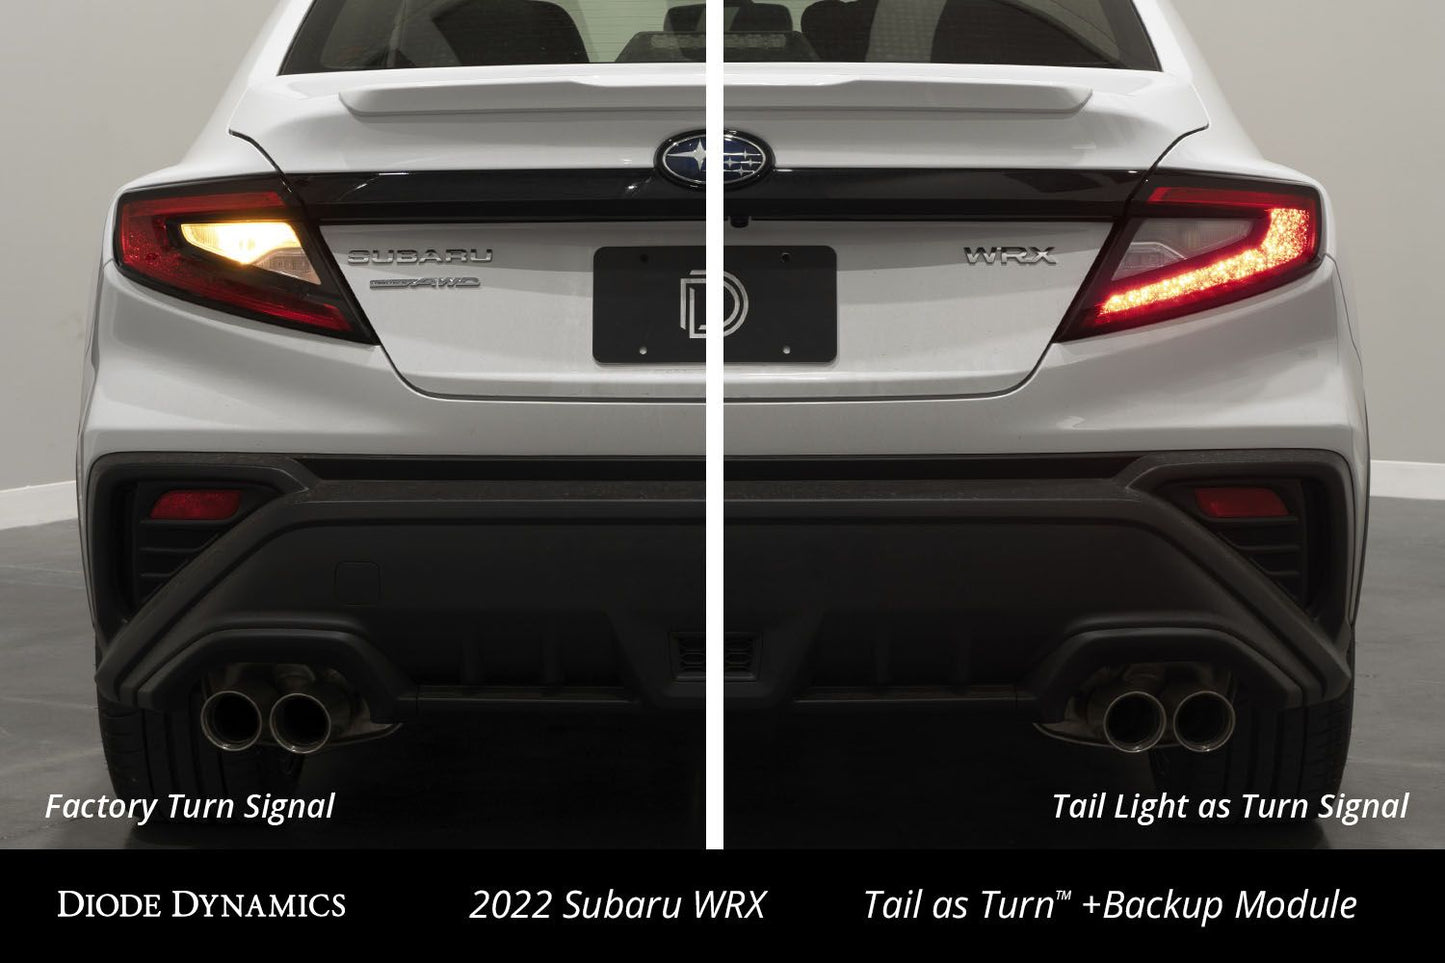 Tail as Turn + Backup Module for 2022+ Subaru WRX